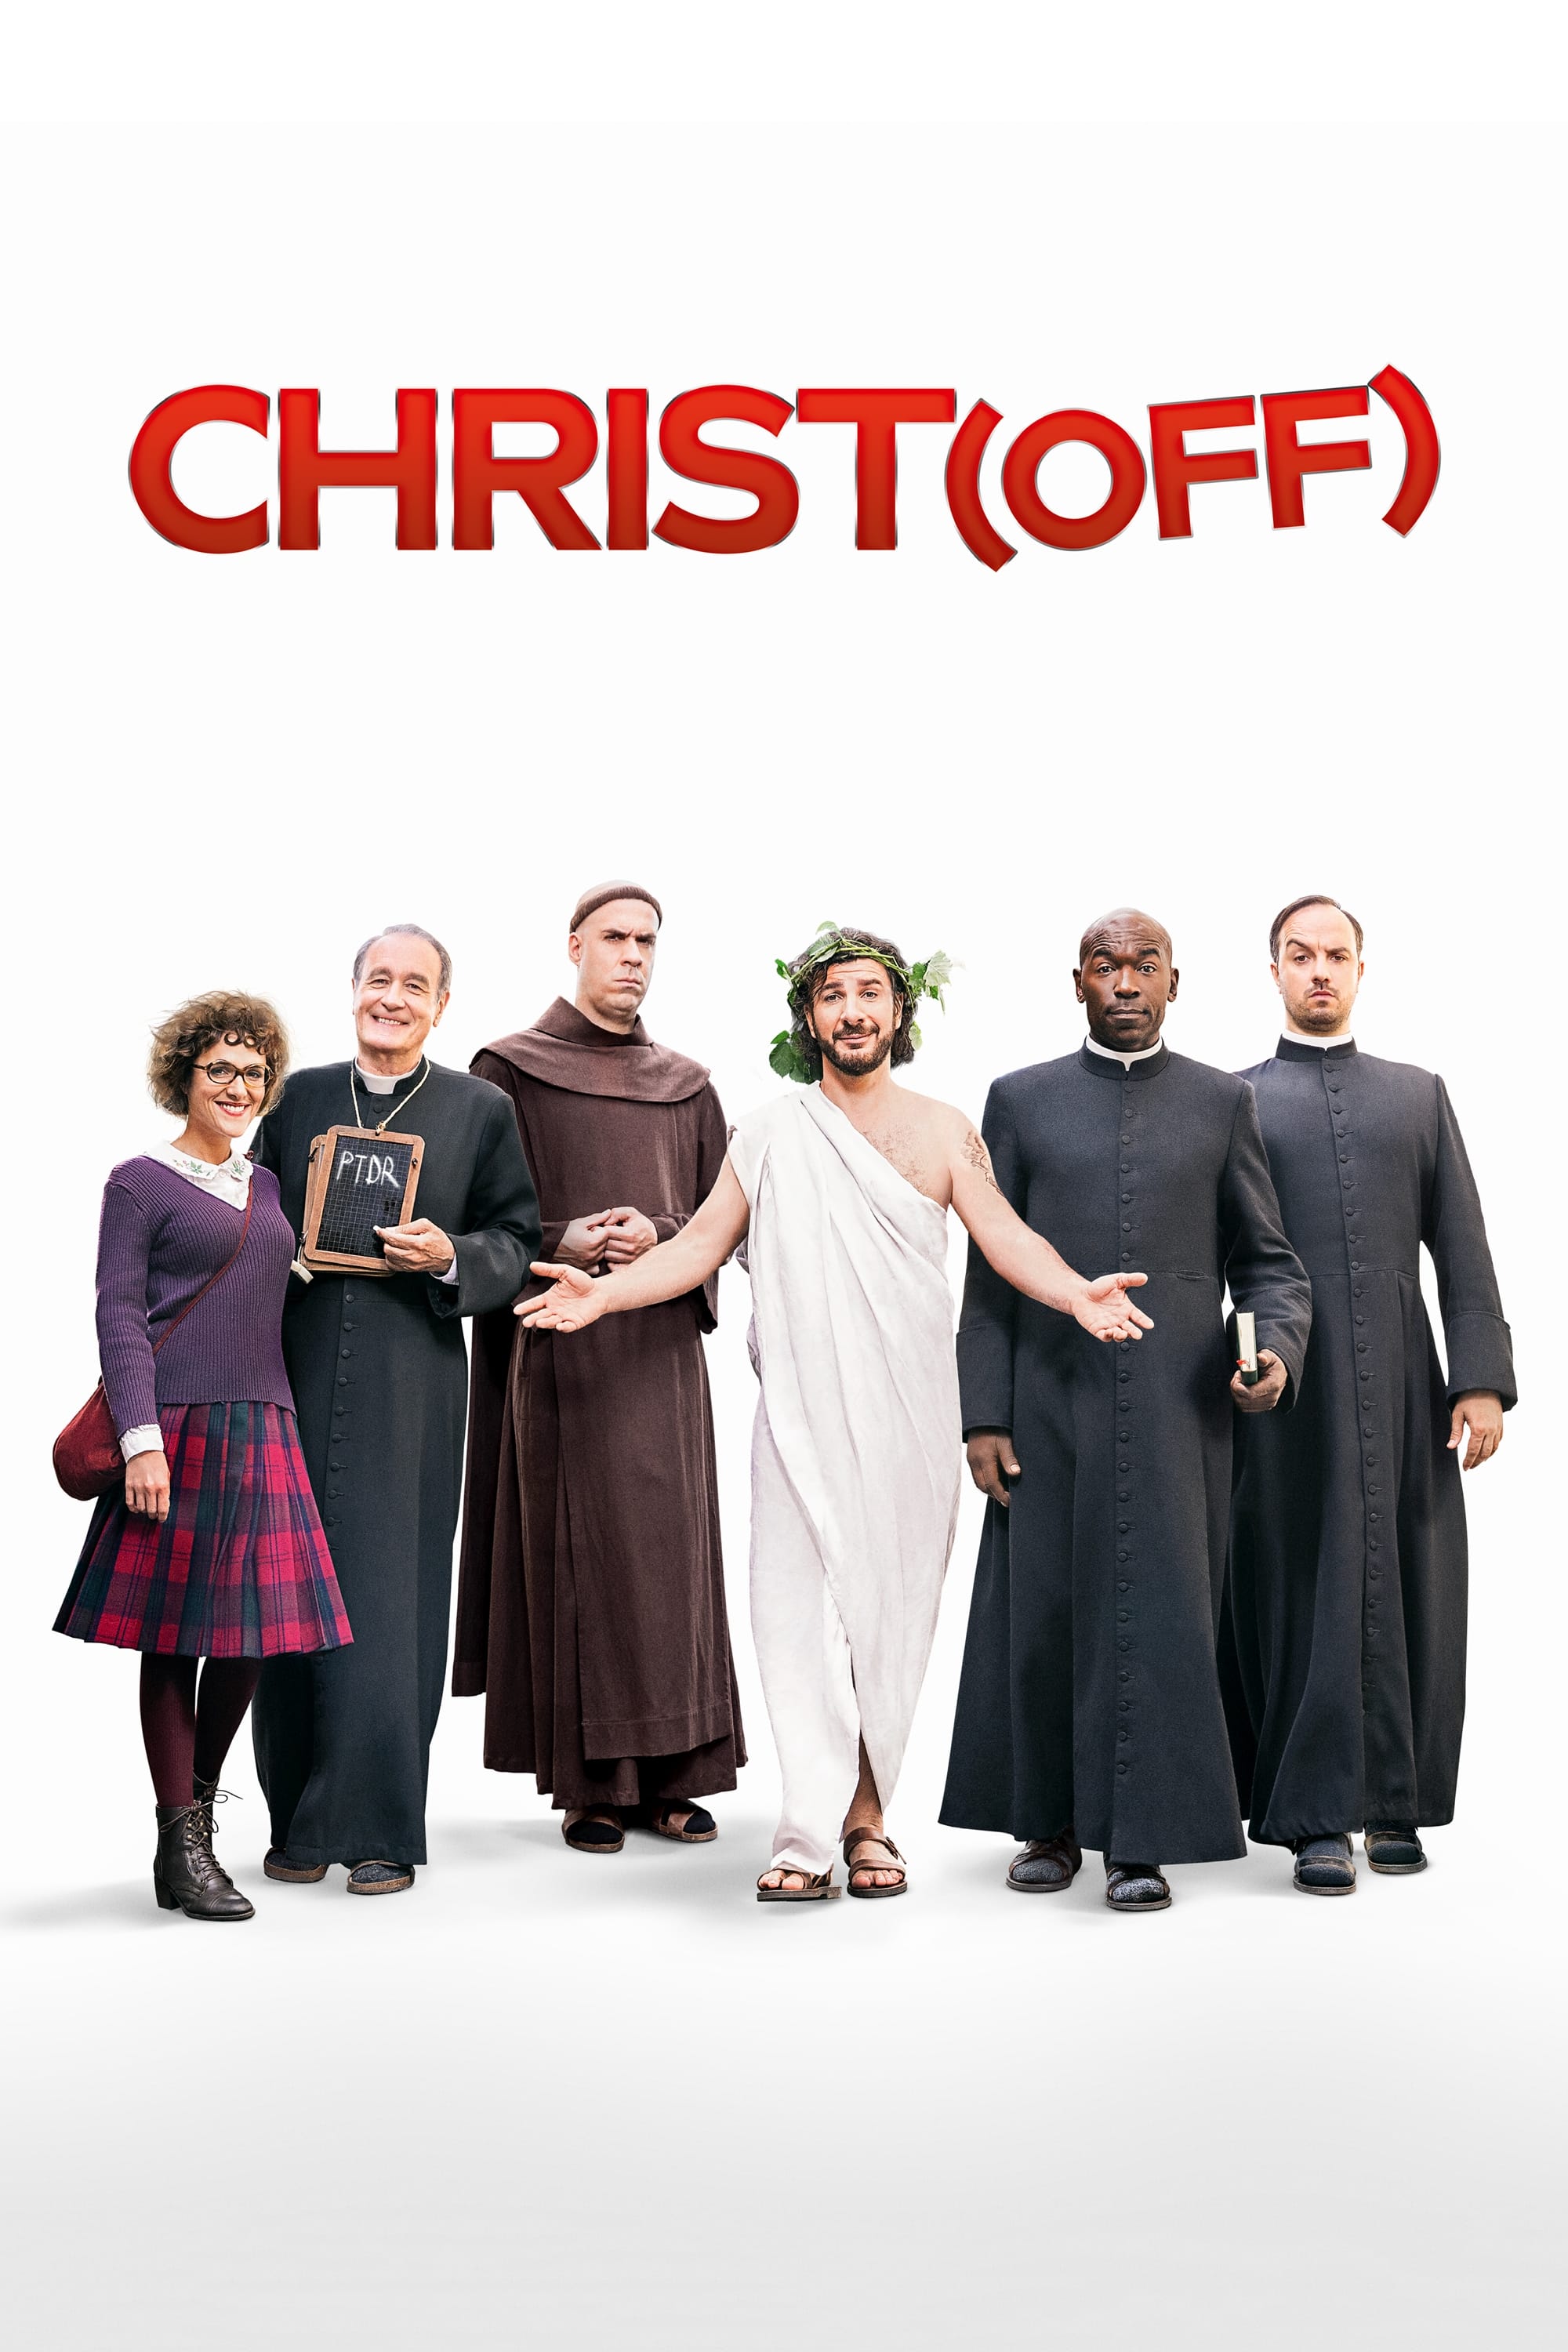 Christ(Off) (2018)